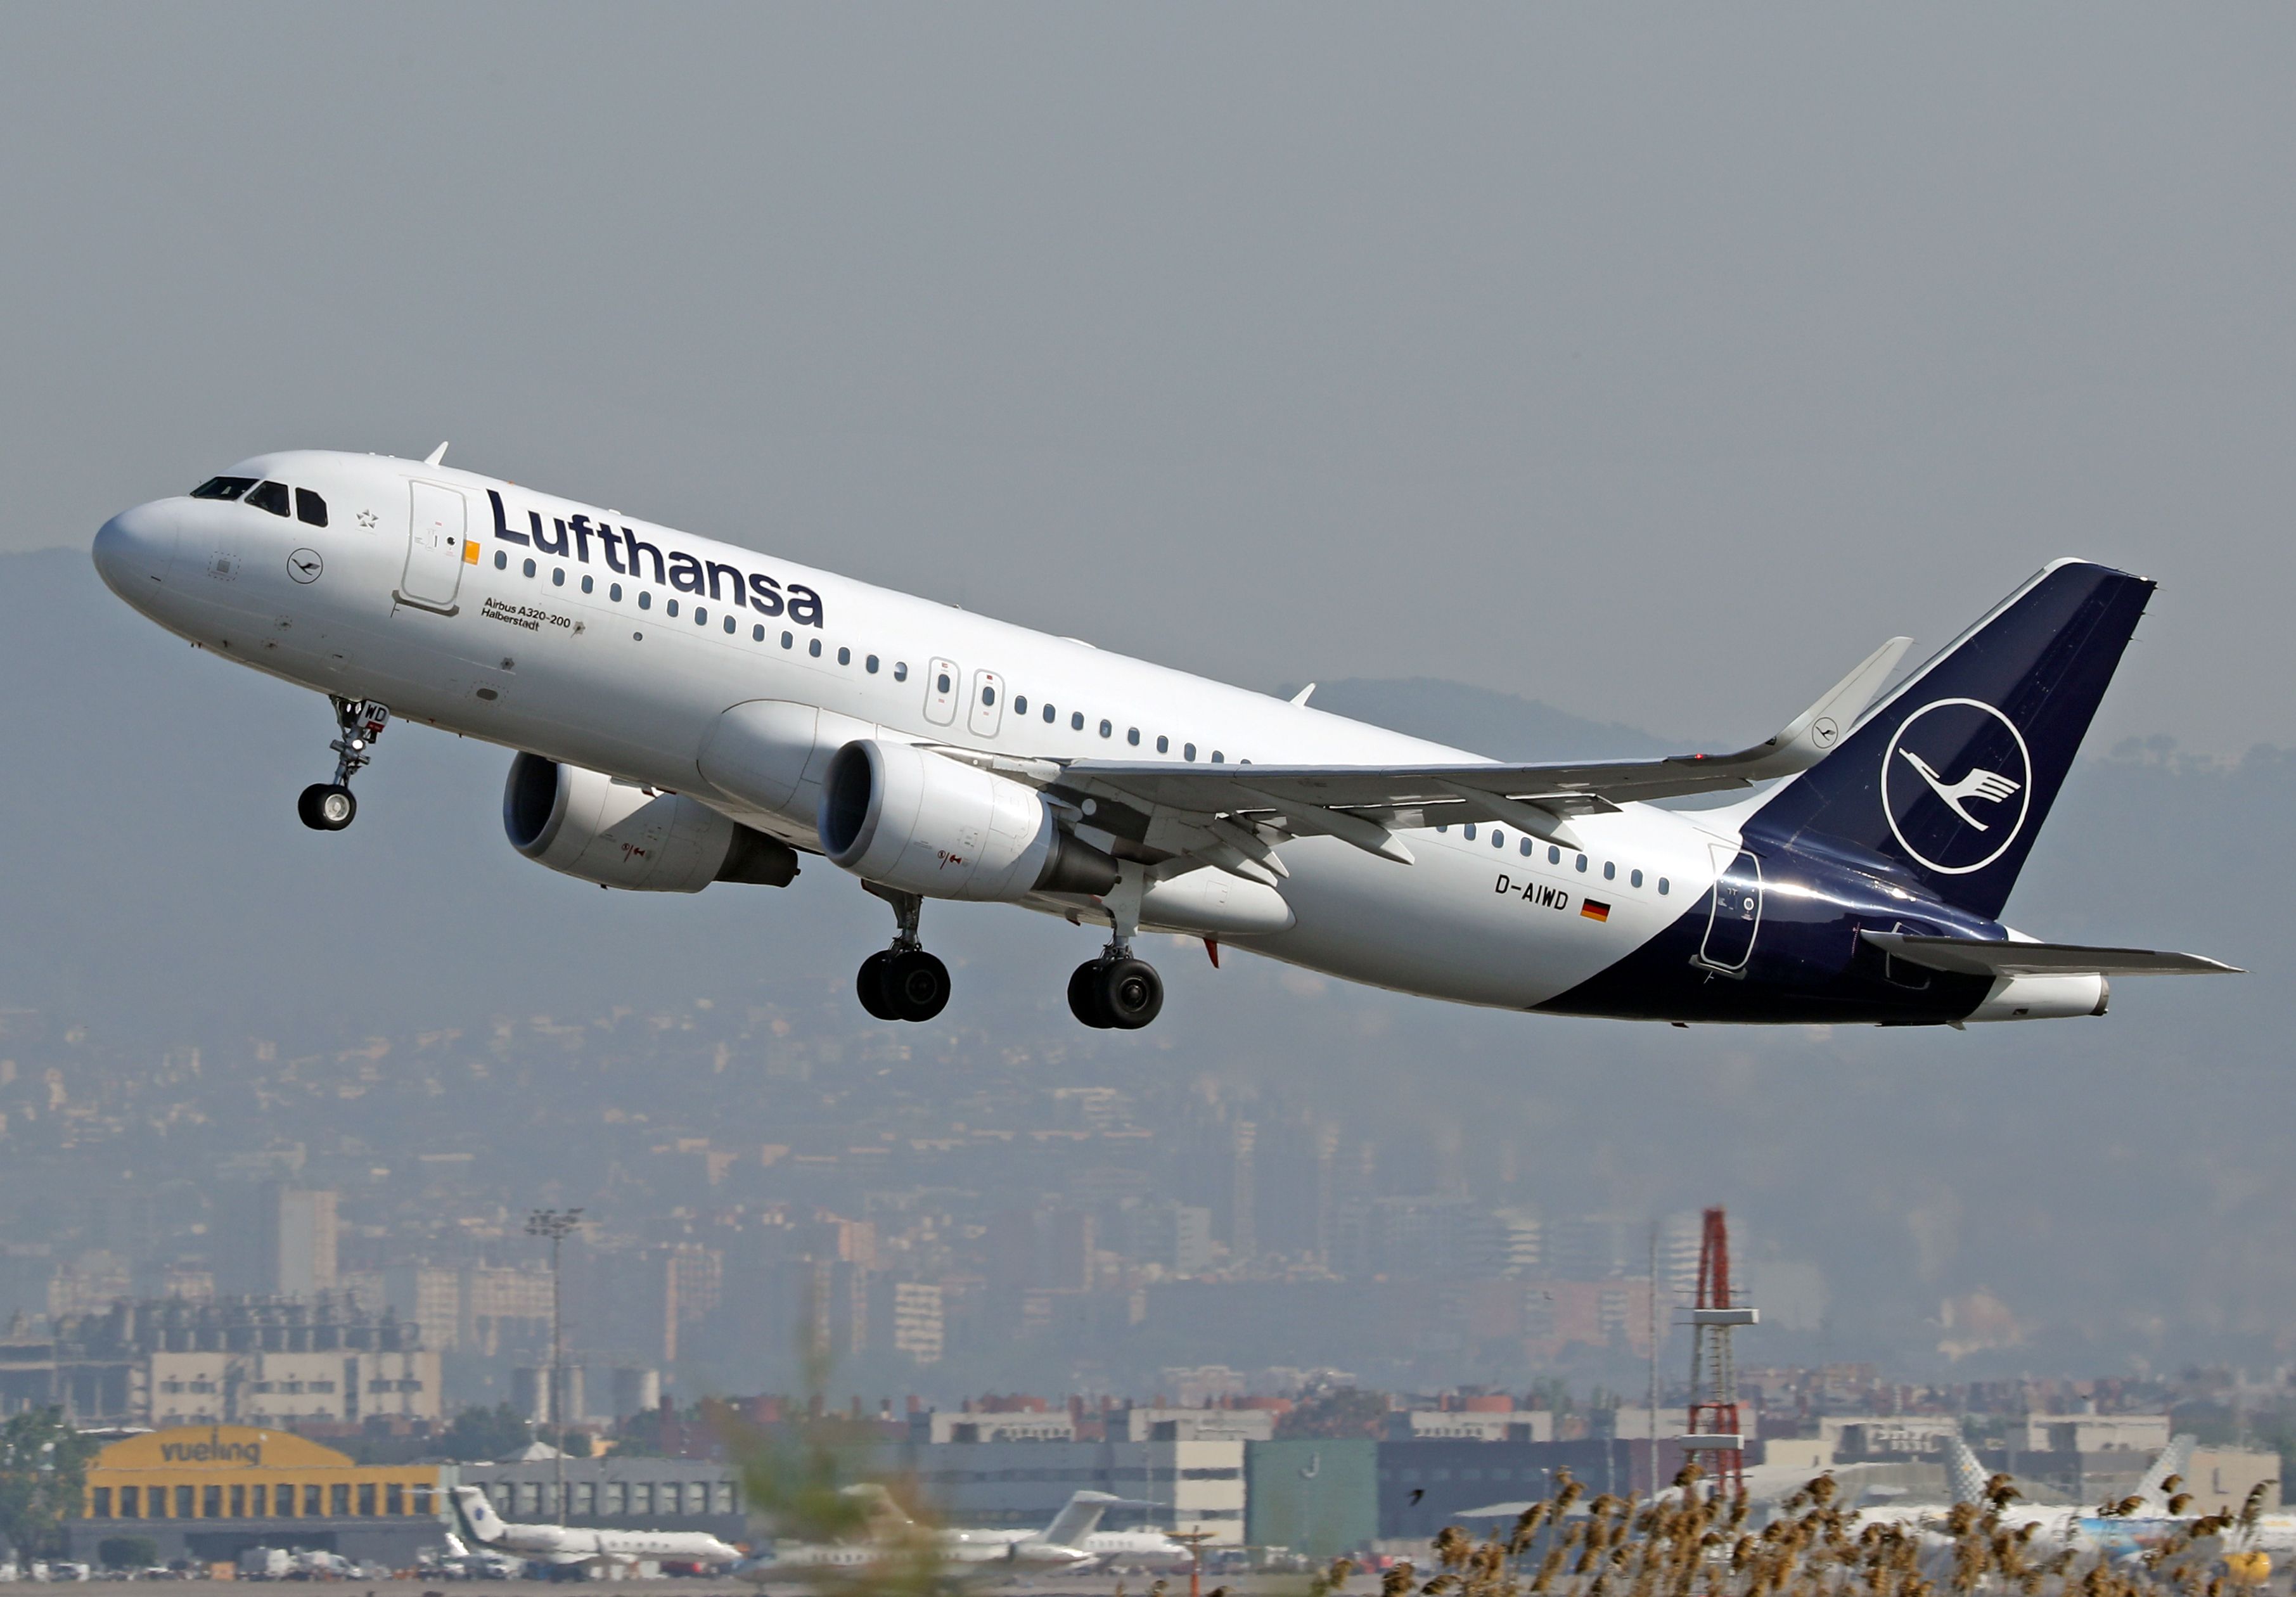 Lufthansa A320 taking off 